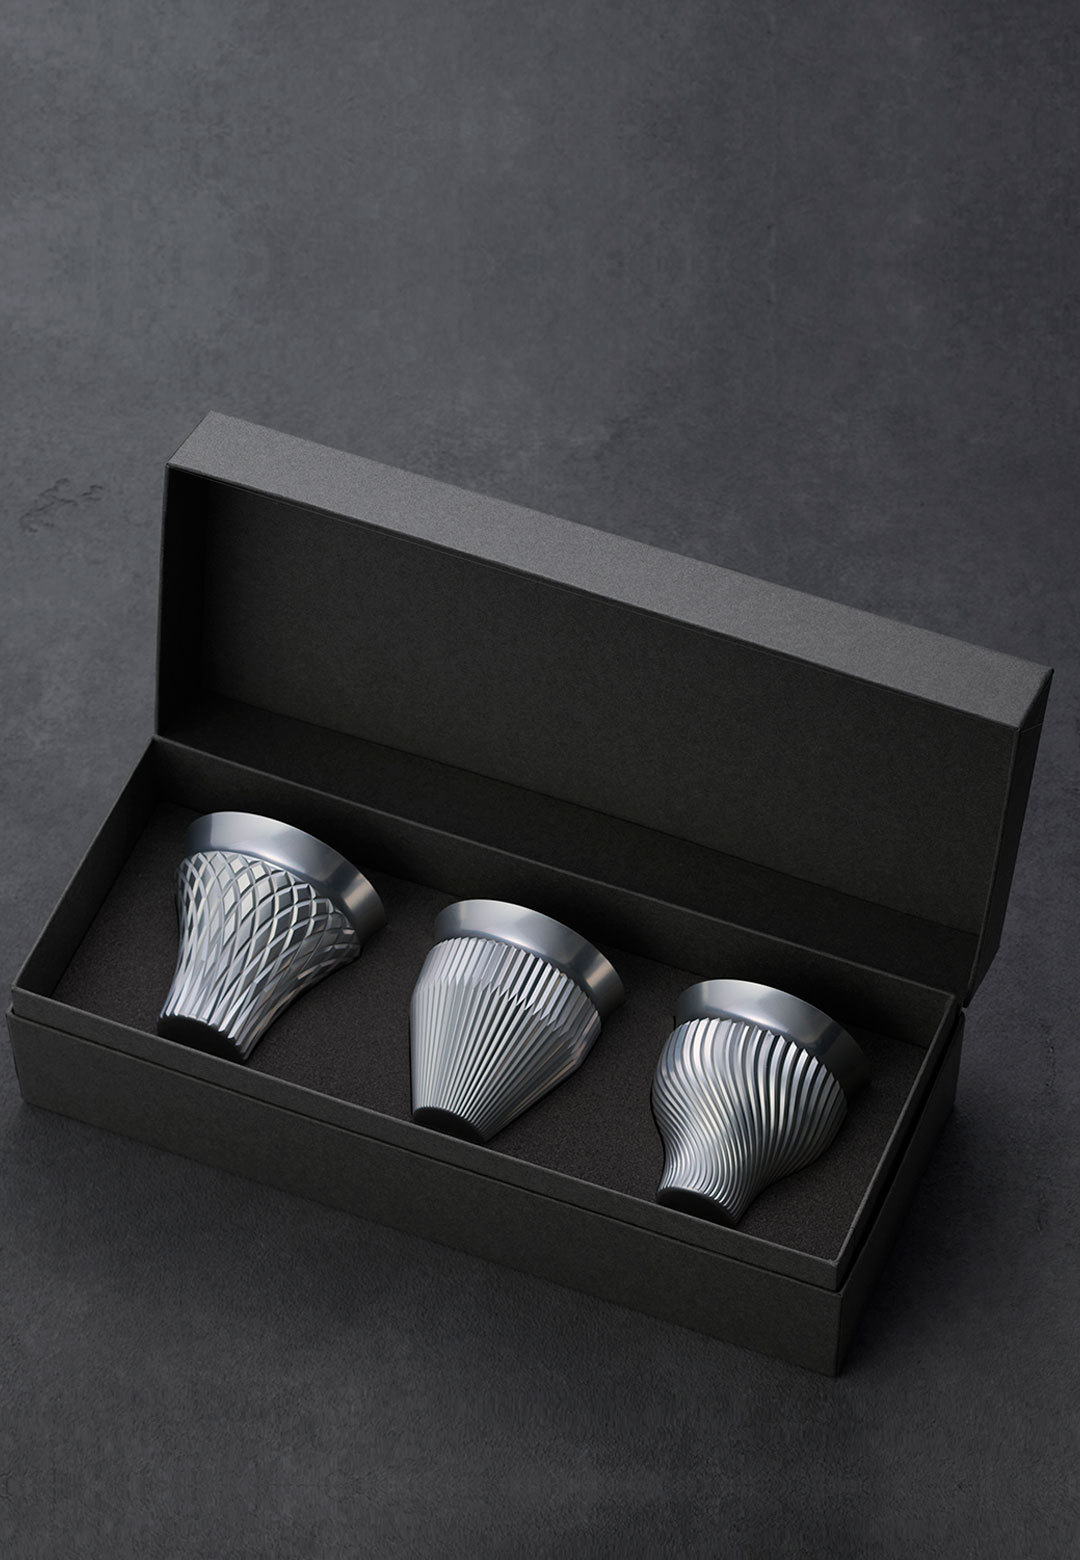 HAKUSAKU by Kenji Abe explores aircraft material duralumin for sake cups collection